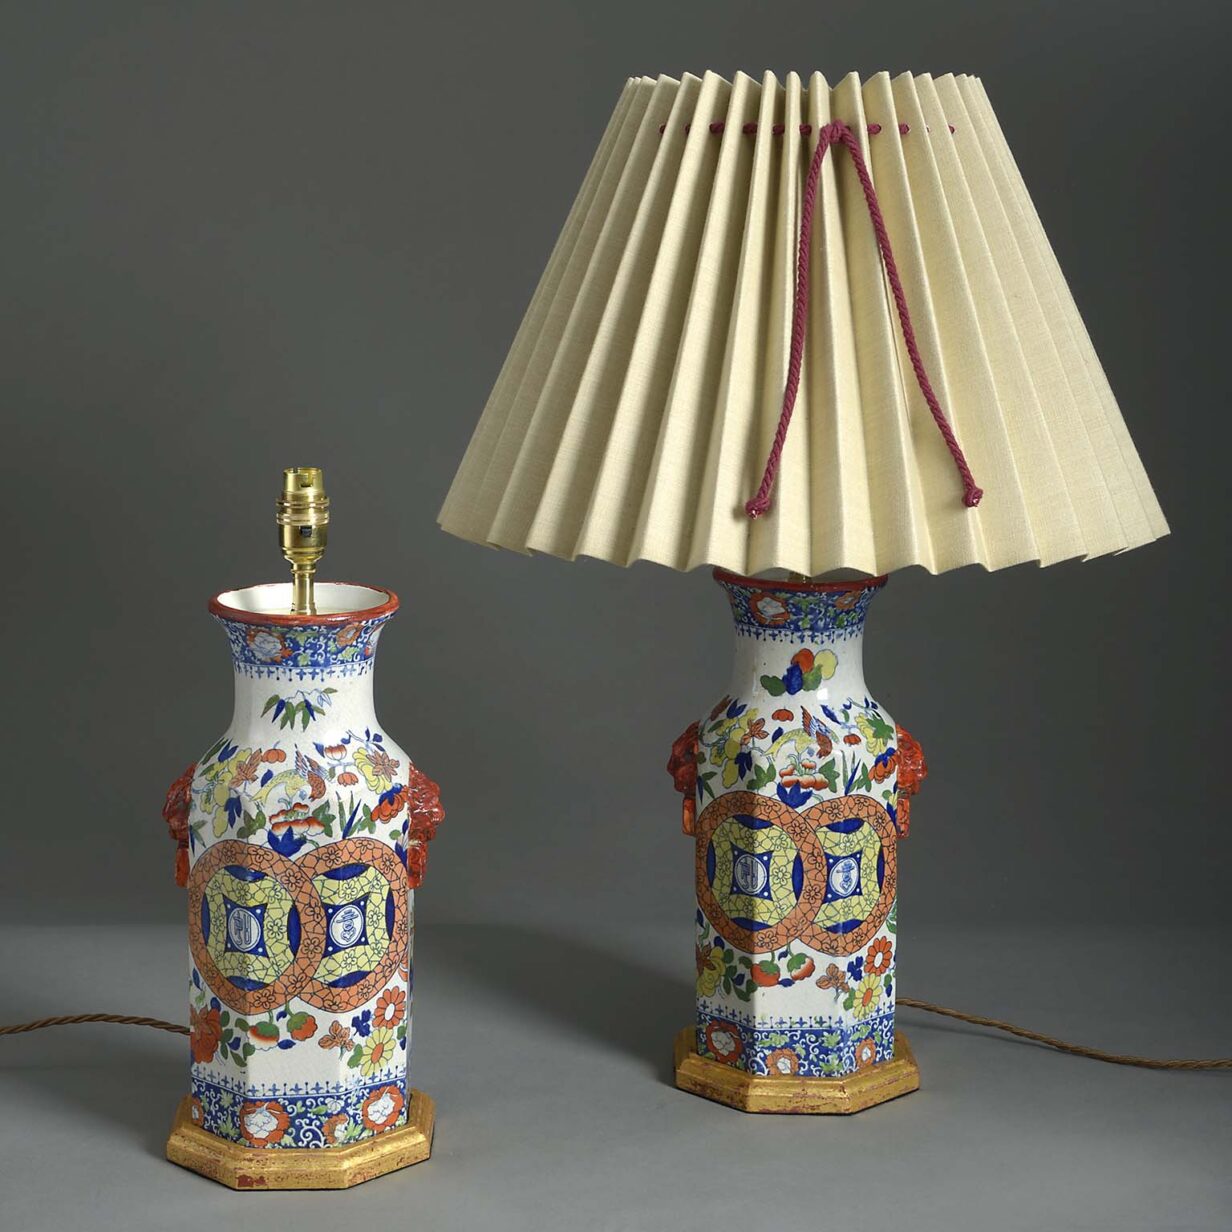 Pair of ironstone lamps